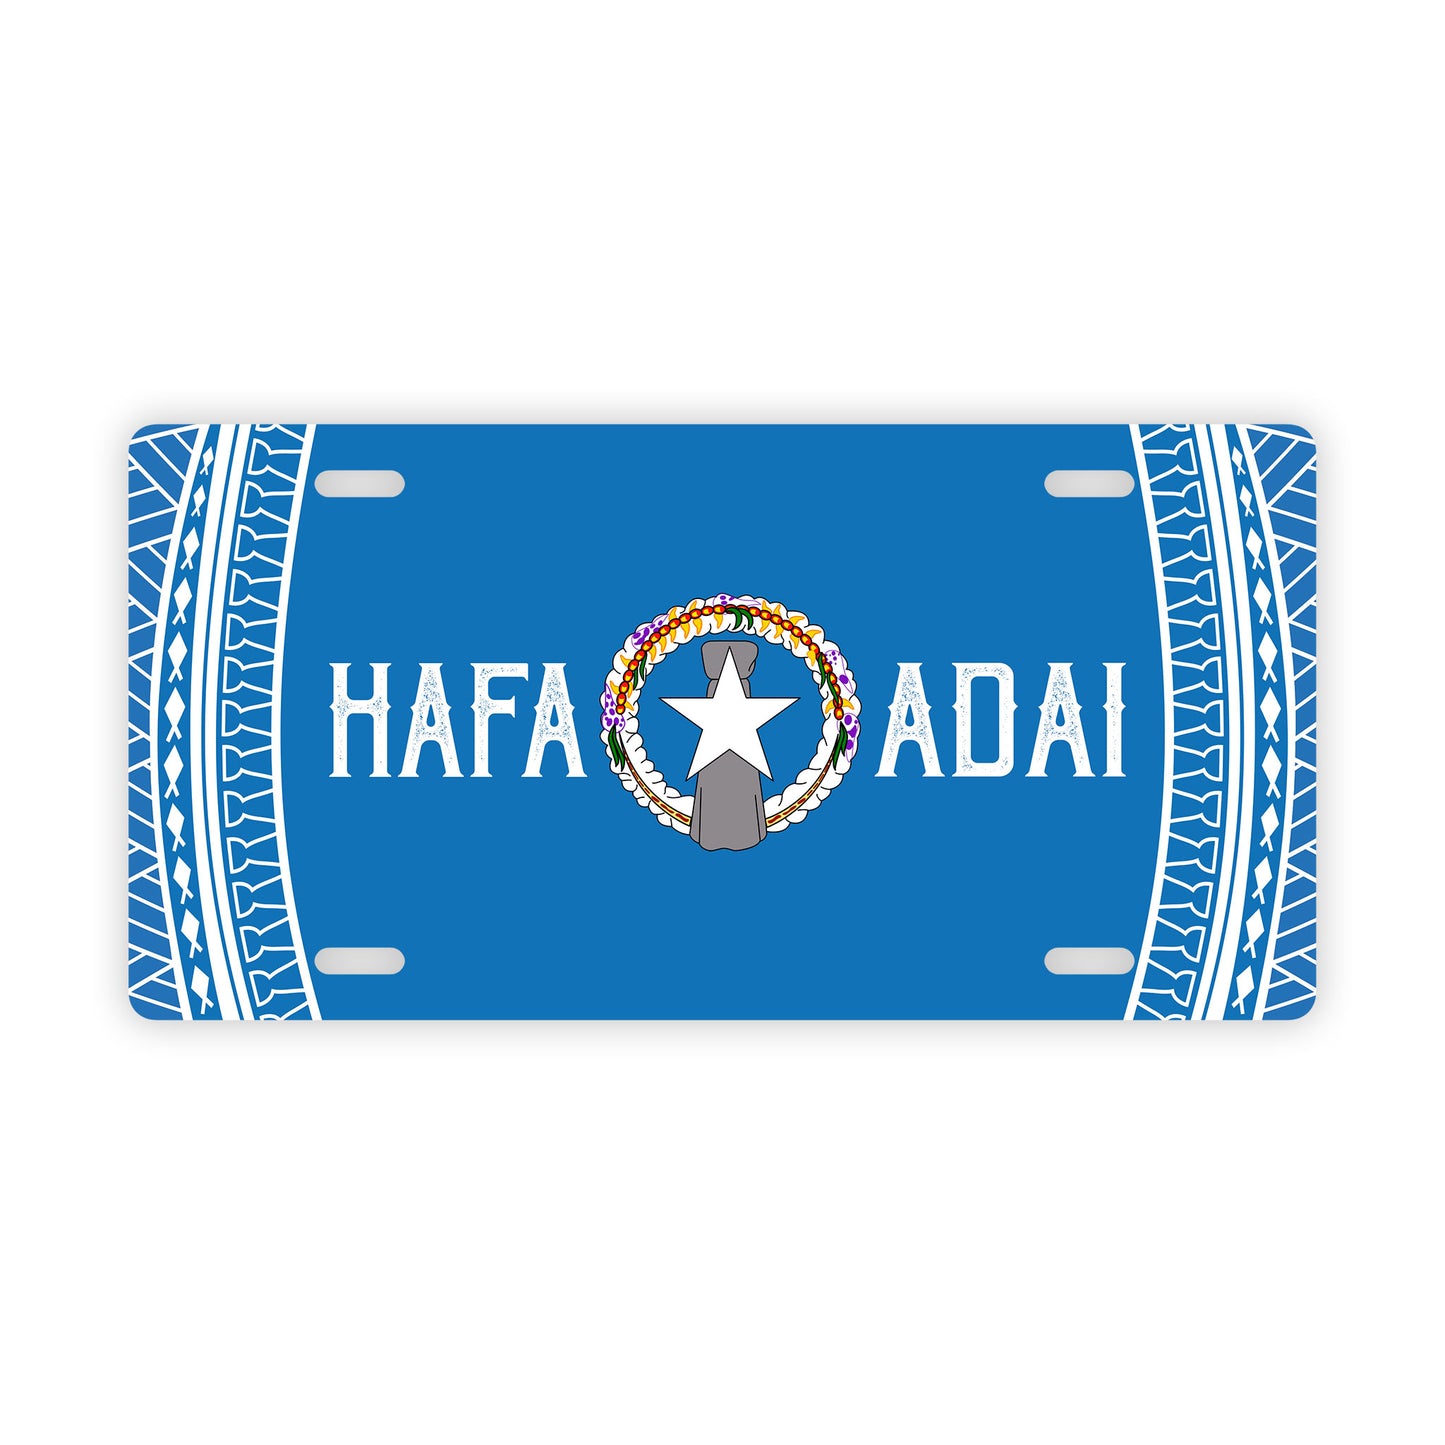 Hafa Adai Tribal Blue CNMI Saipan Tinian Rota Car License Plate